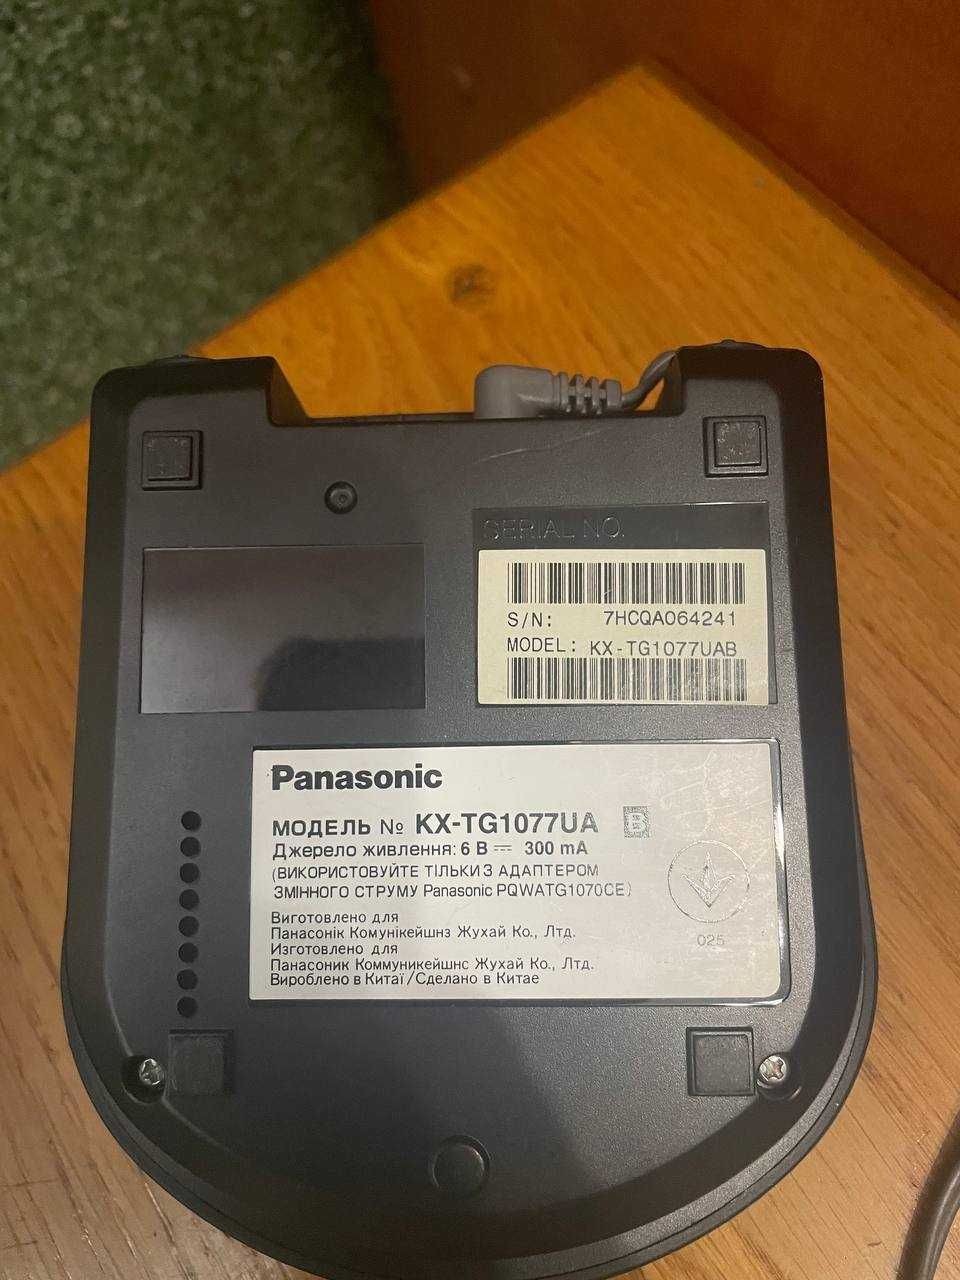 Panasonic KX-TG1077